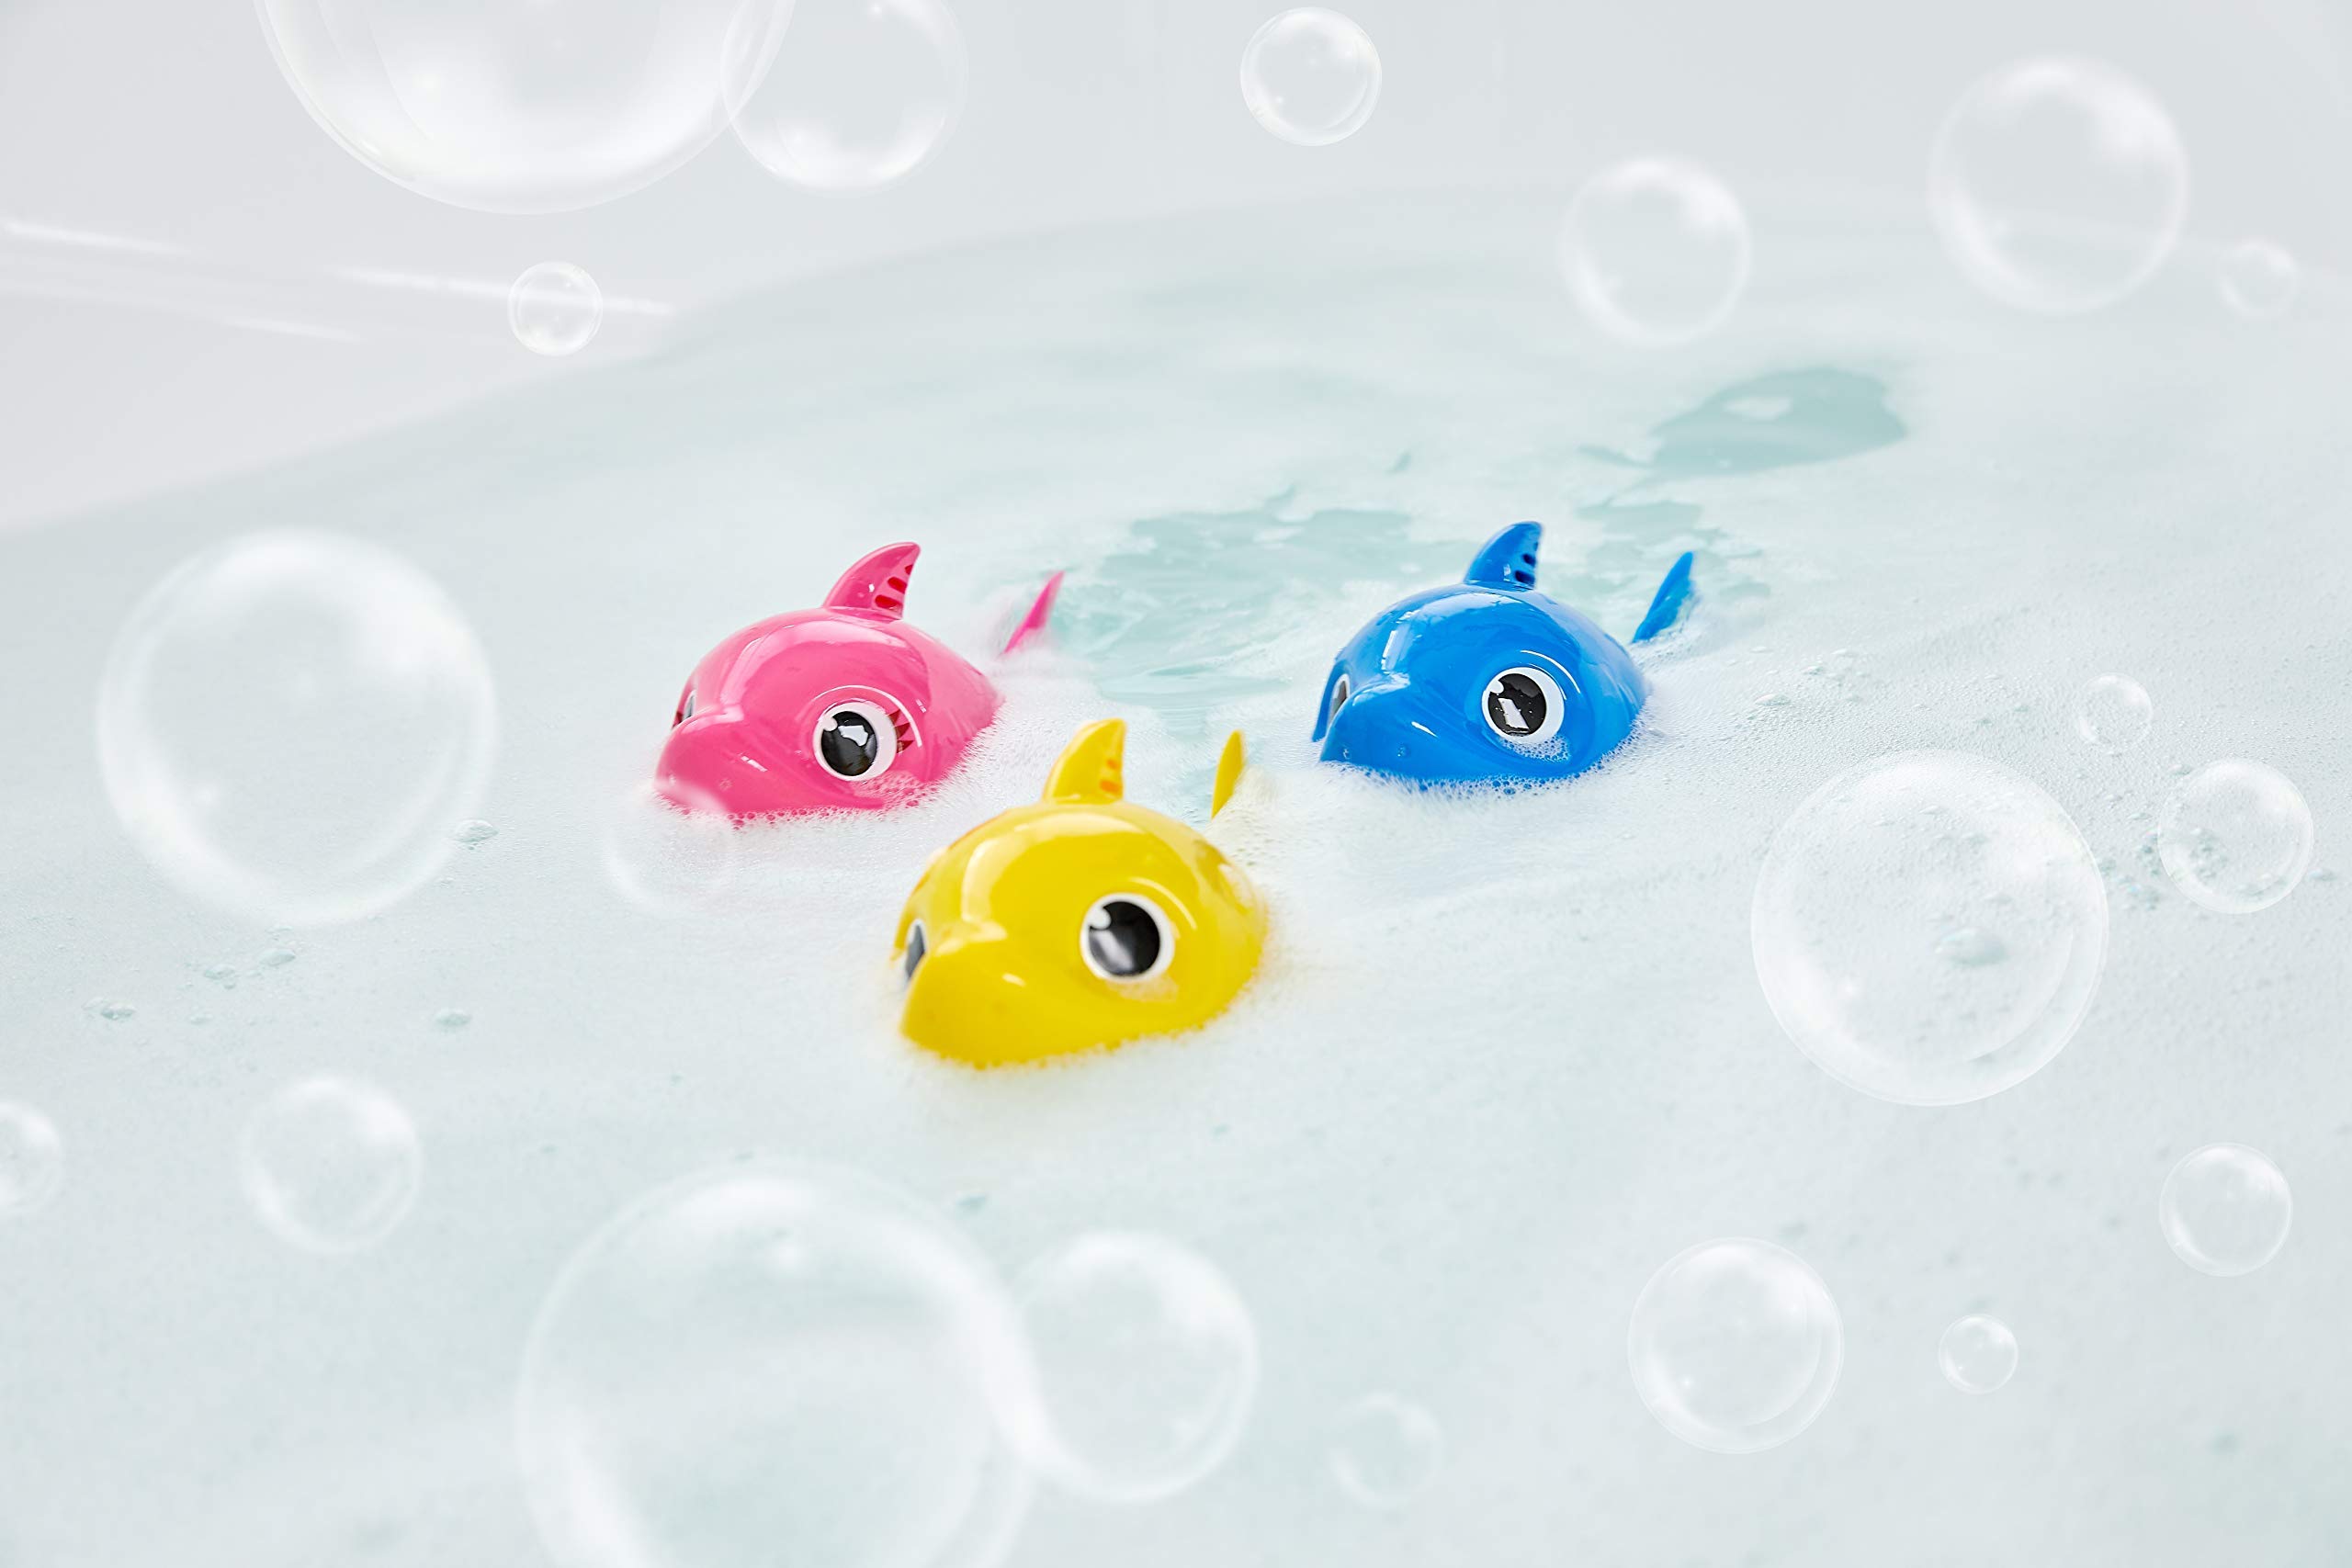 Robo Alive Junior Baby Shark Battery-Powered Bath Toy by Zuru, Sing and Swim Mommy Shark, Pink (Custom Packaging)